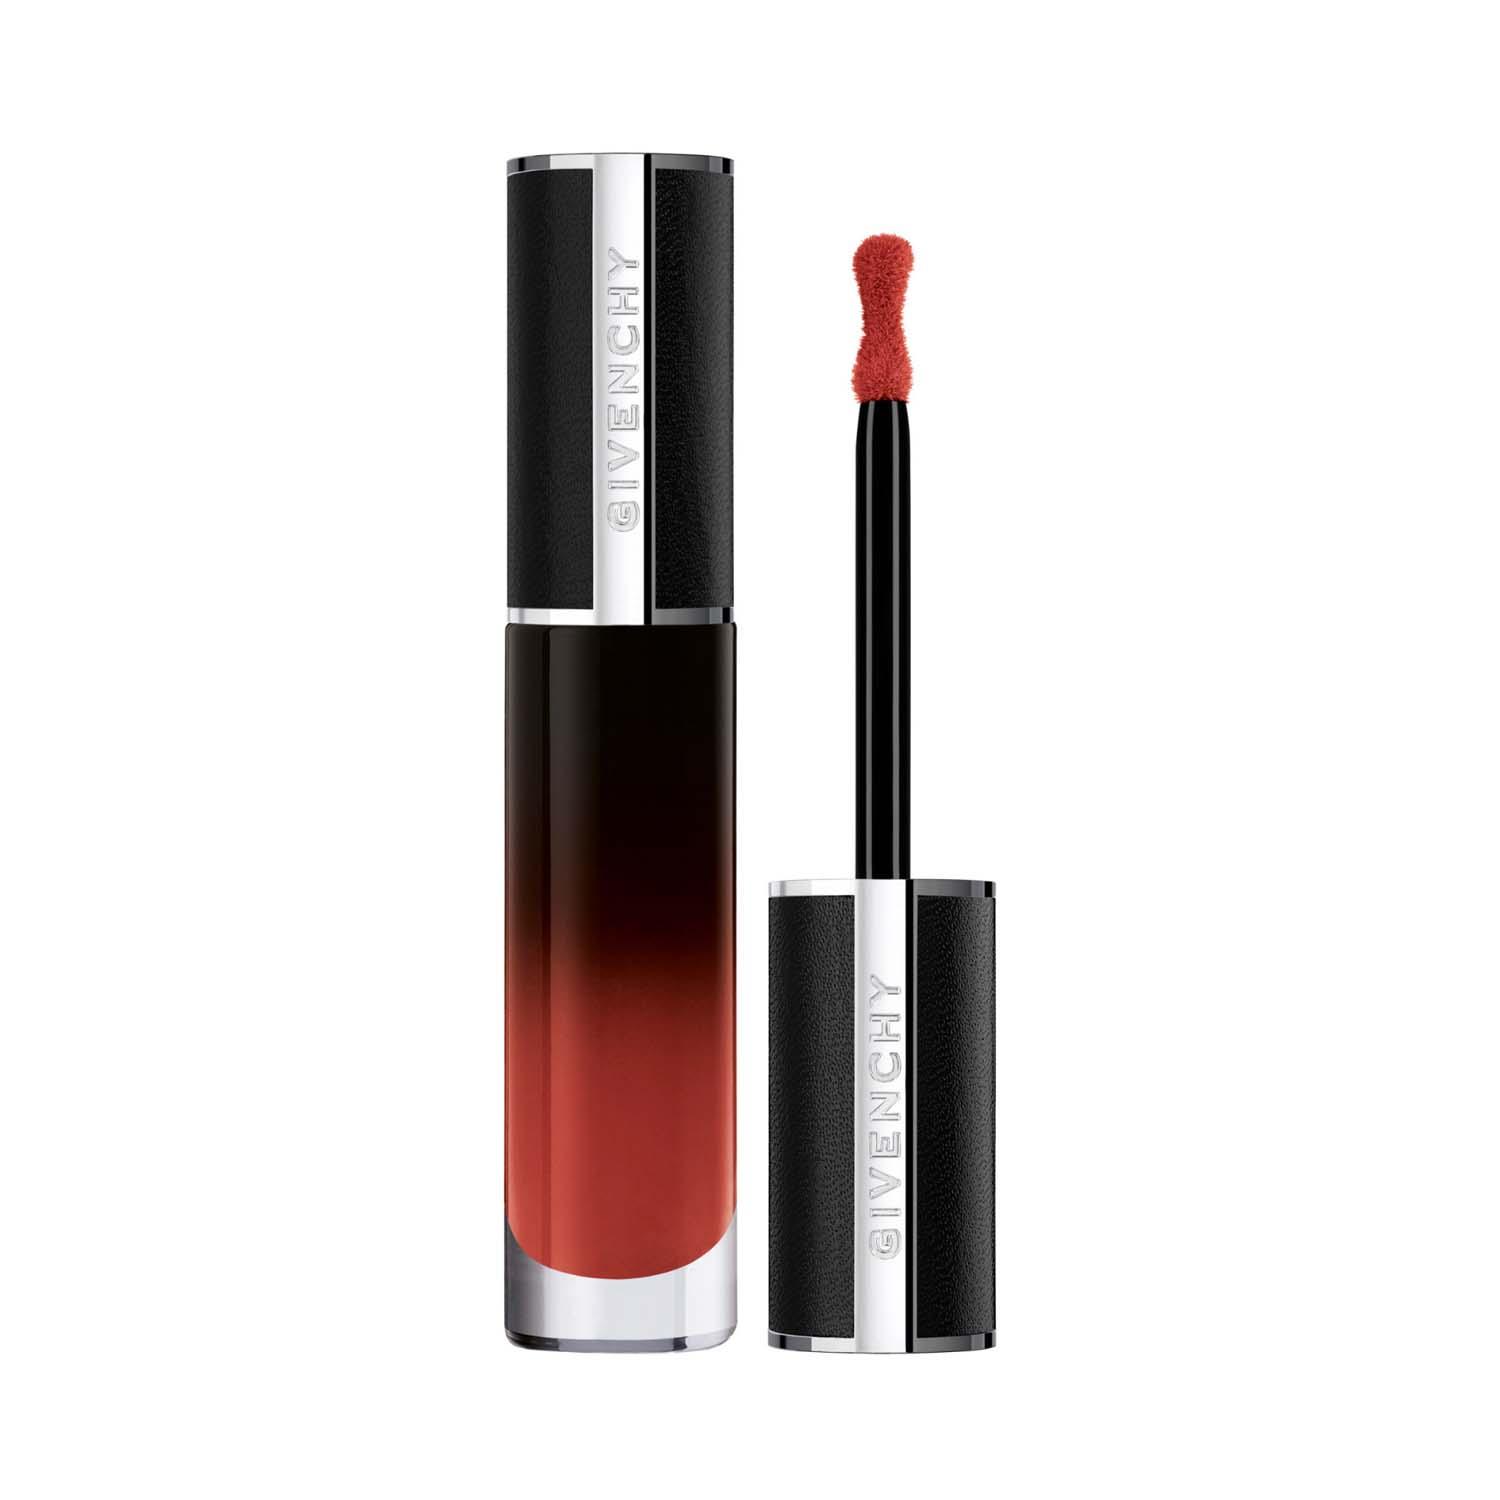 Givenchy | Givenchy Le Rouge Interdit Cream Velvet Liquid Lipstick - N51 Brun Cuivre (6.5 ml)